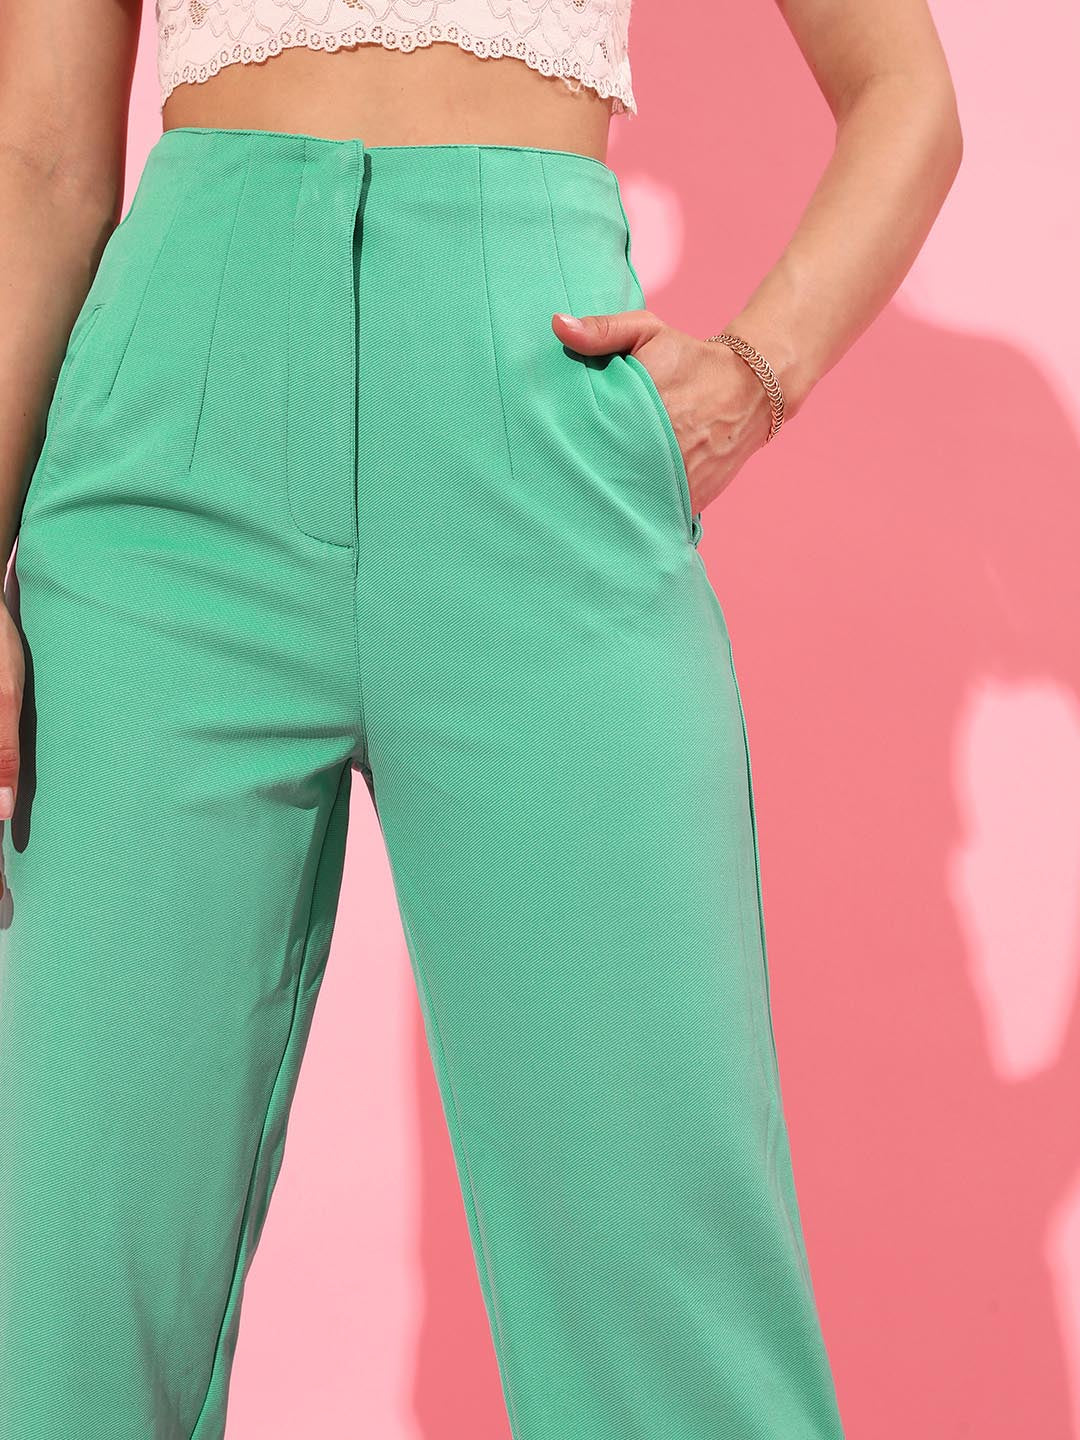 Capreze Dress Pants for Women High Waist Office Work Pant with Pockets  Casual Straight Leg Slacks Business Trousers Pink XL  Walmartcom